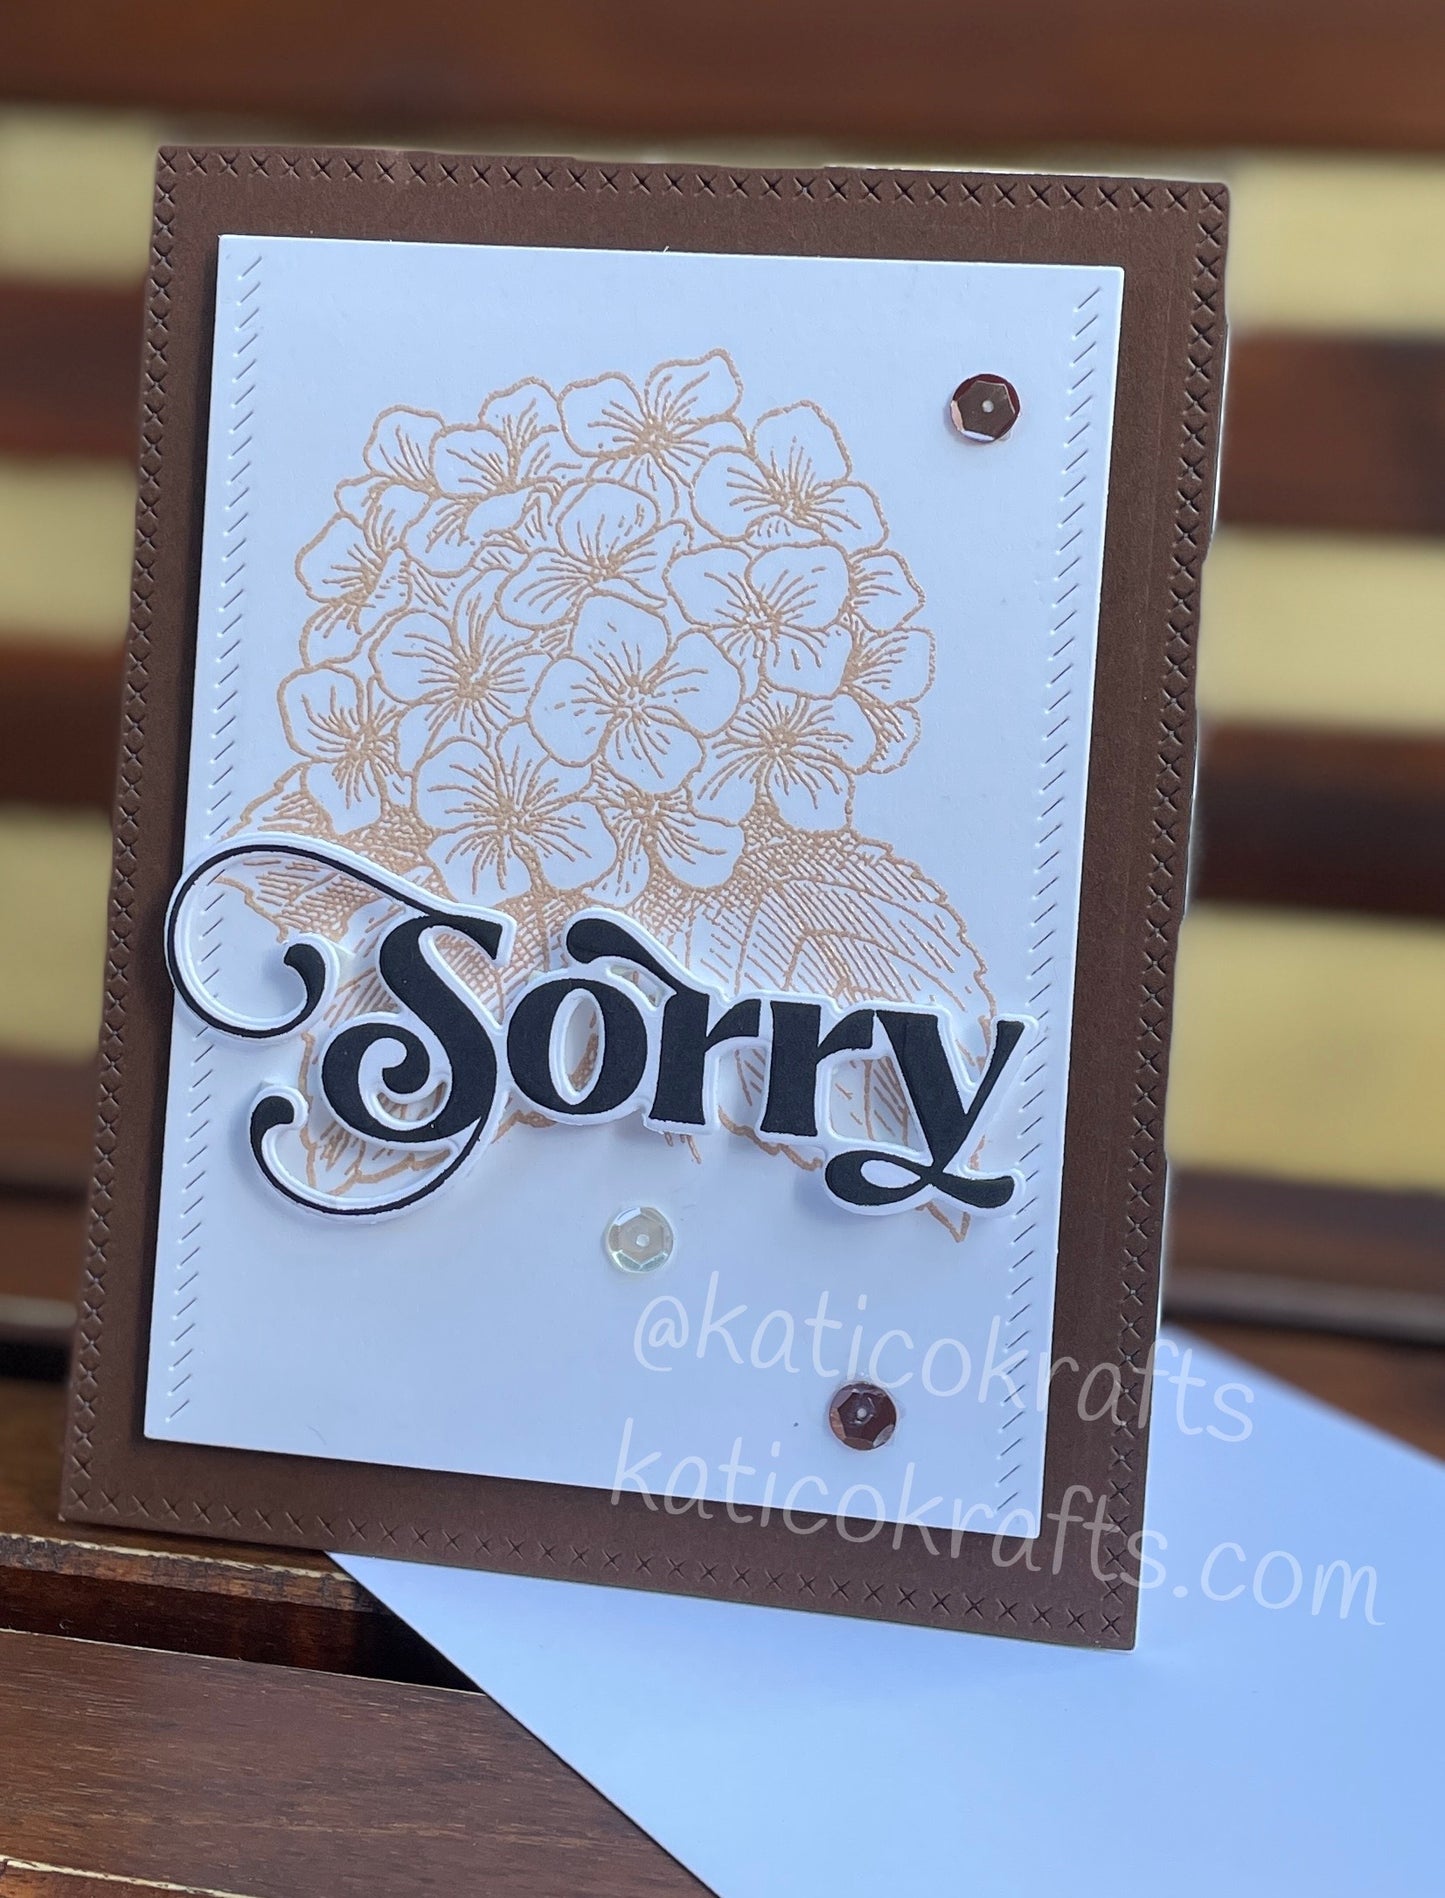 Sorry Card